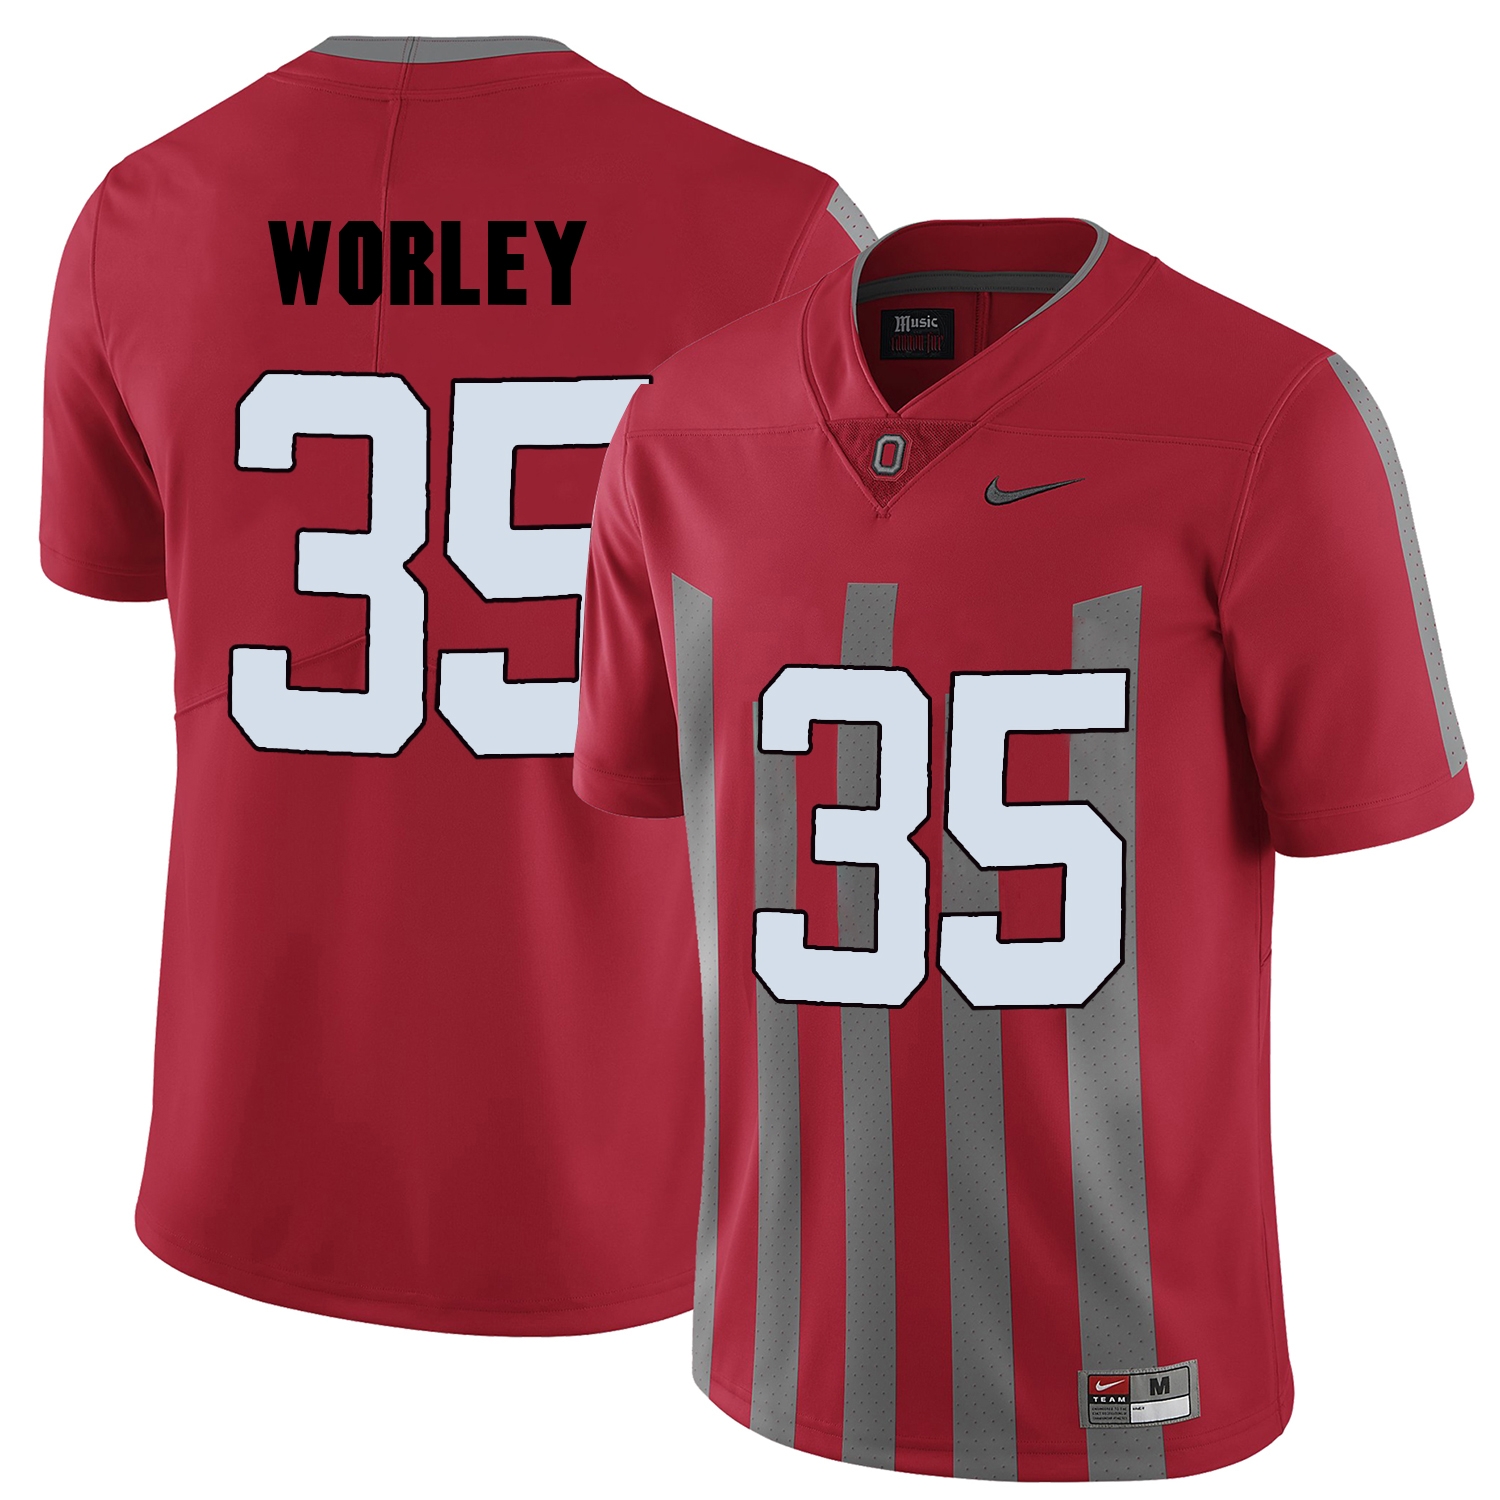 Ohio State Buckeyes Men's NCAA Chris Worley #35 Red Elite College Football Jersey JLA8149XJ